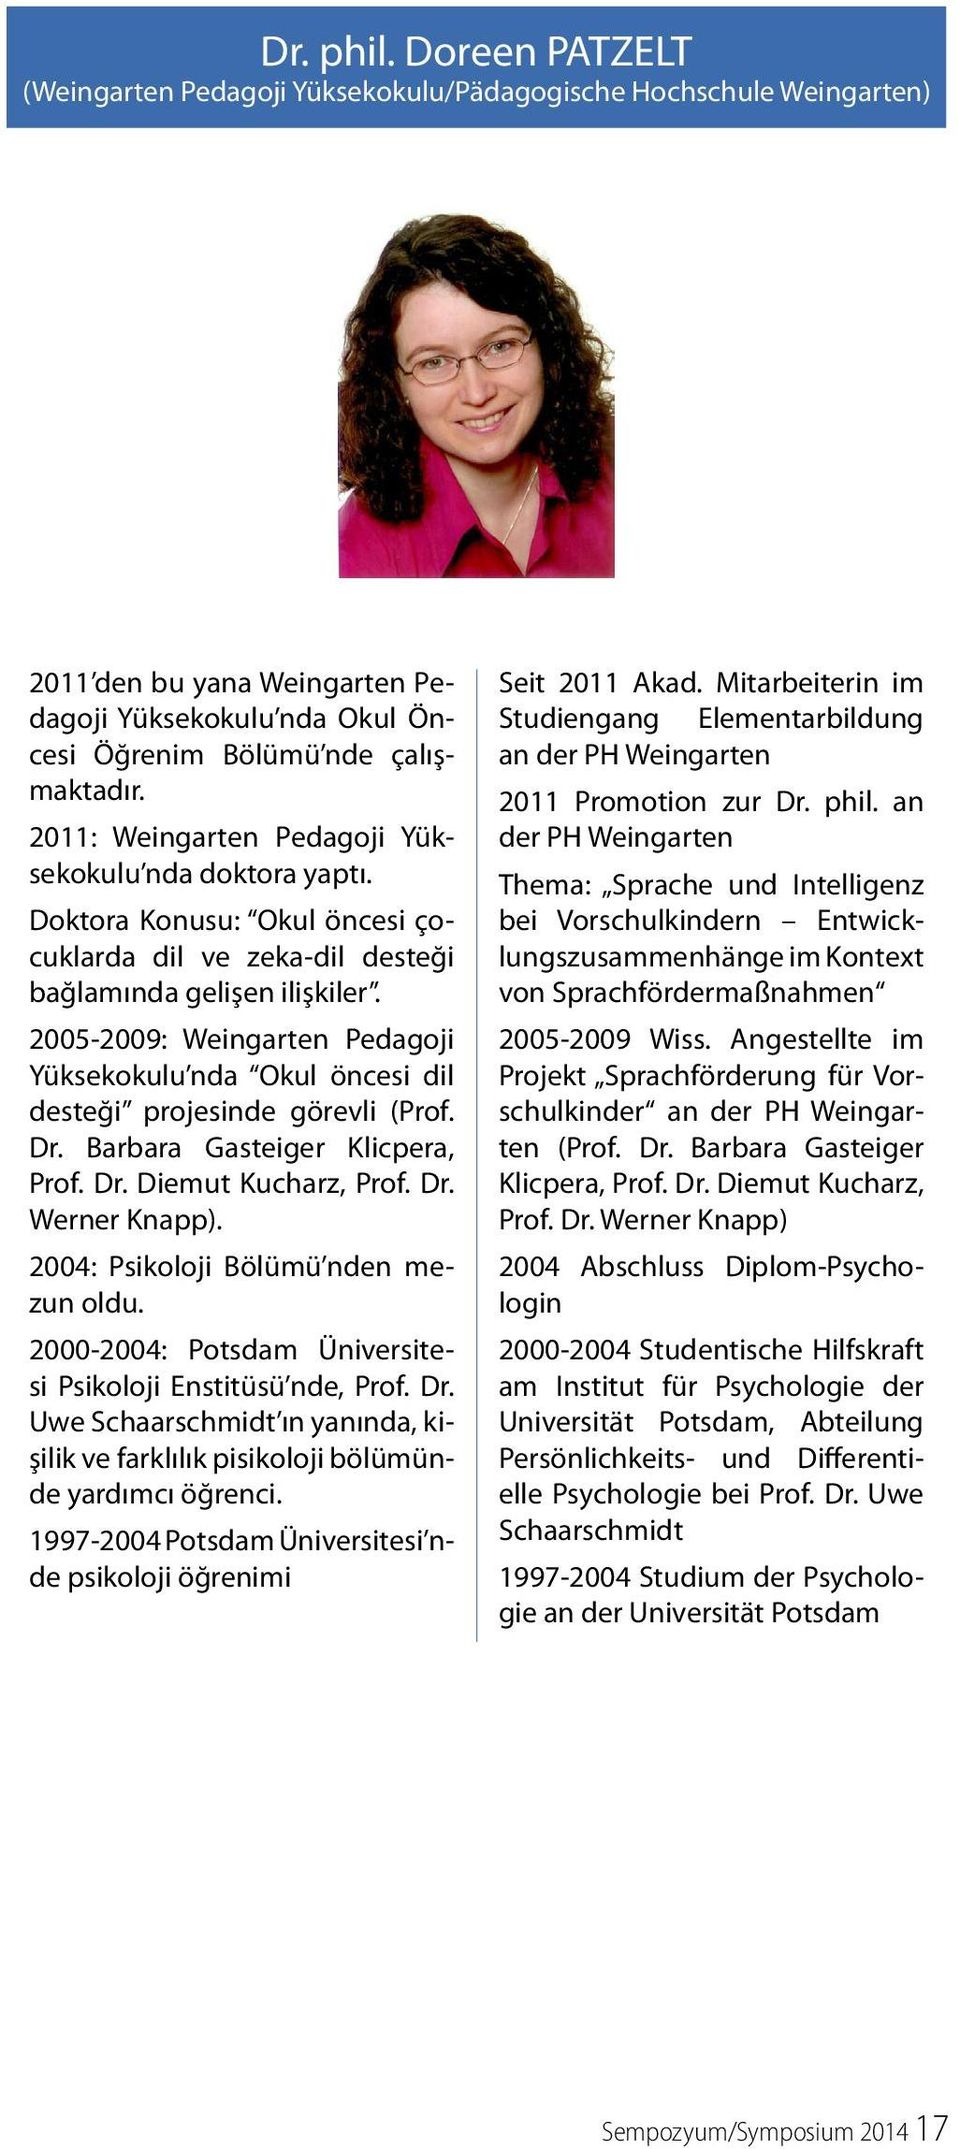 2005-2009: Weingarten Pedagoji Yüksekokulu nda Okul öncesi dil desteği projesinde görevli (Prof. Dr. Barbara Gasteiger Klicpera, Prof. Dr. Diemut Kucharz, Prof. Dr. Werner Knapp).